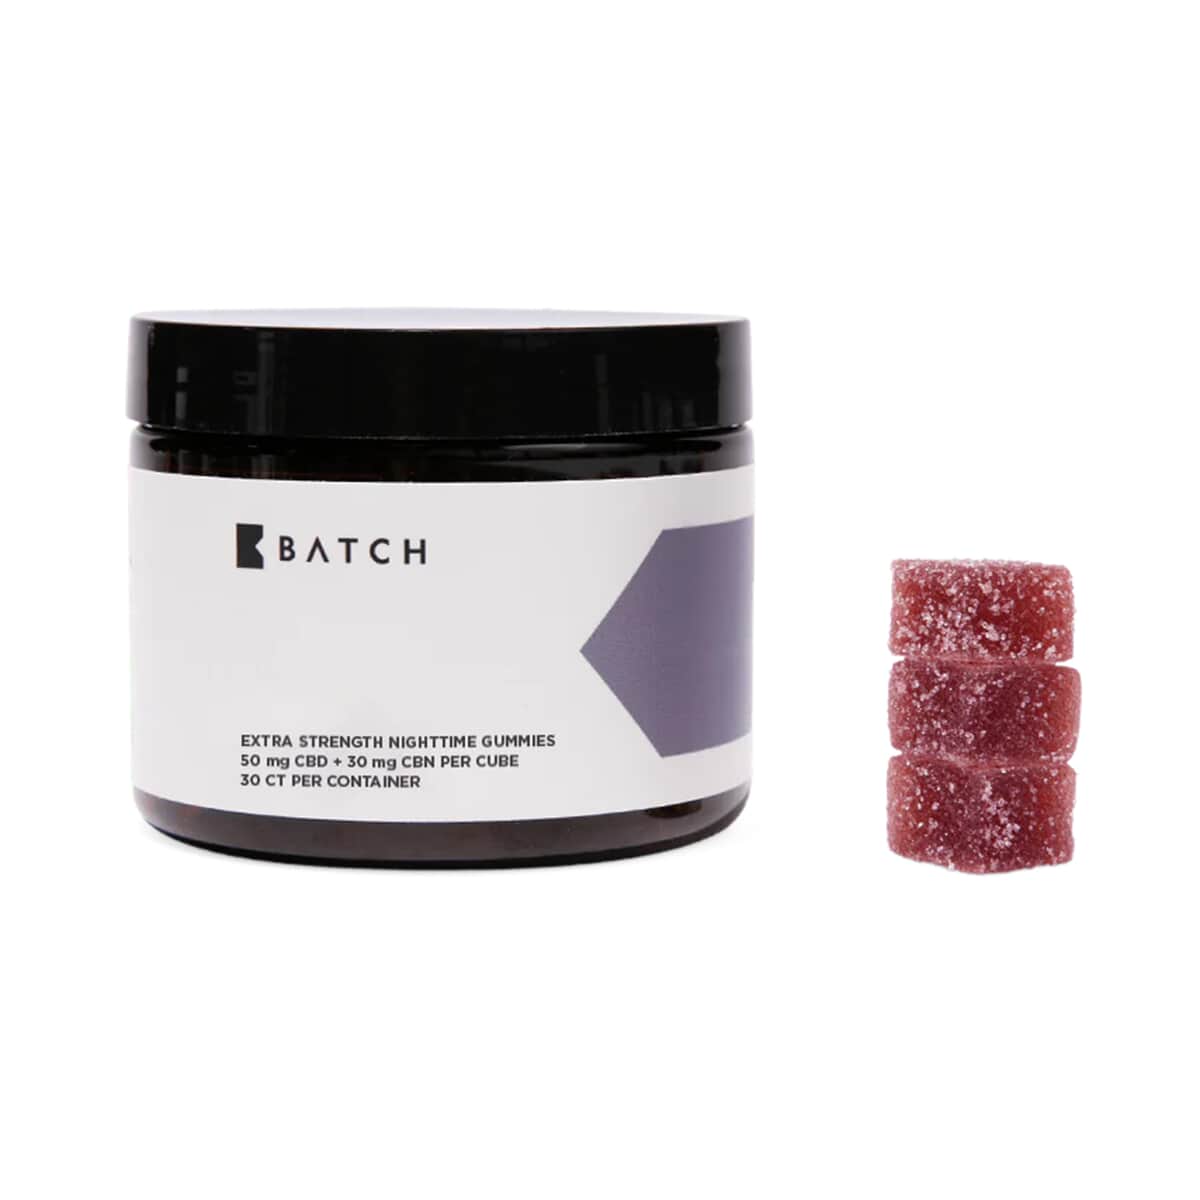 Batch Extra Strength Nighttime Gummies image number 0